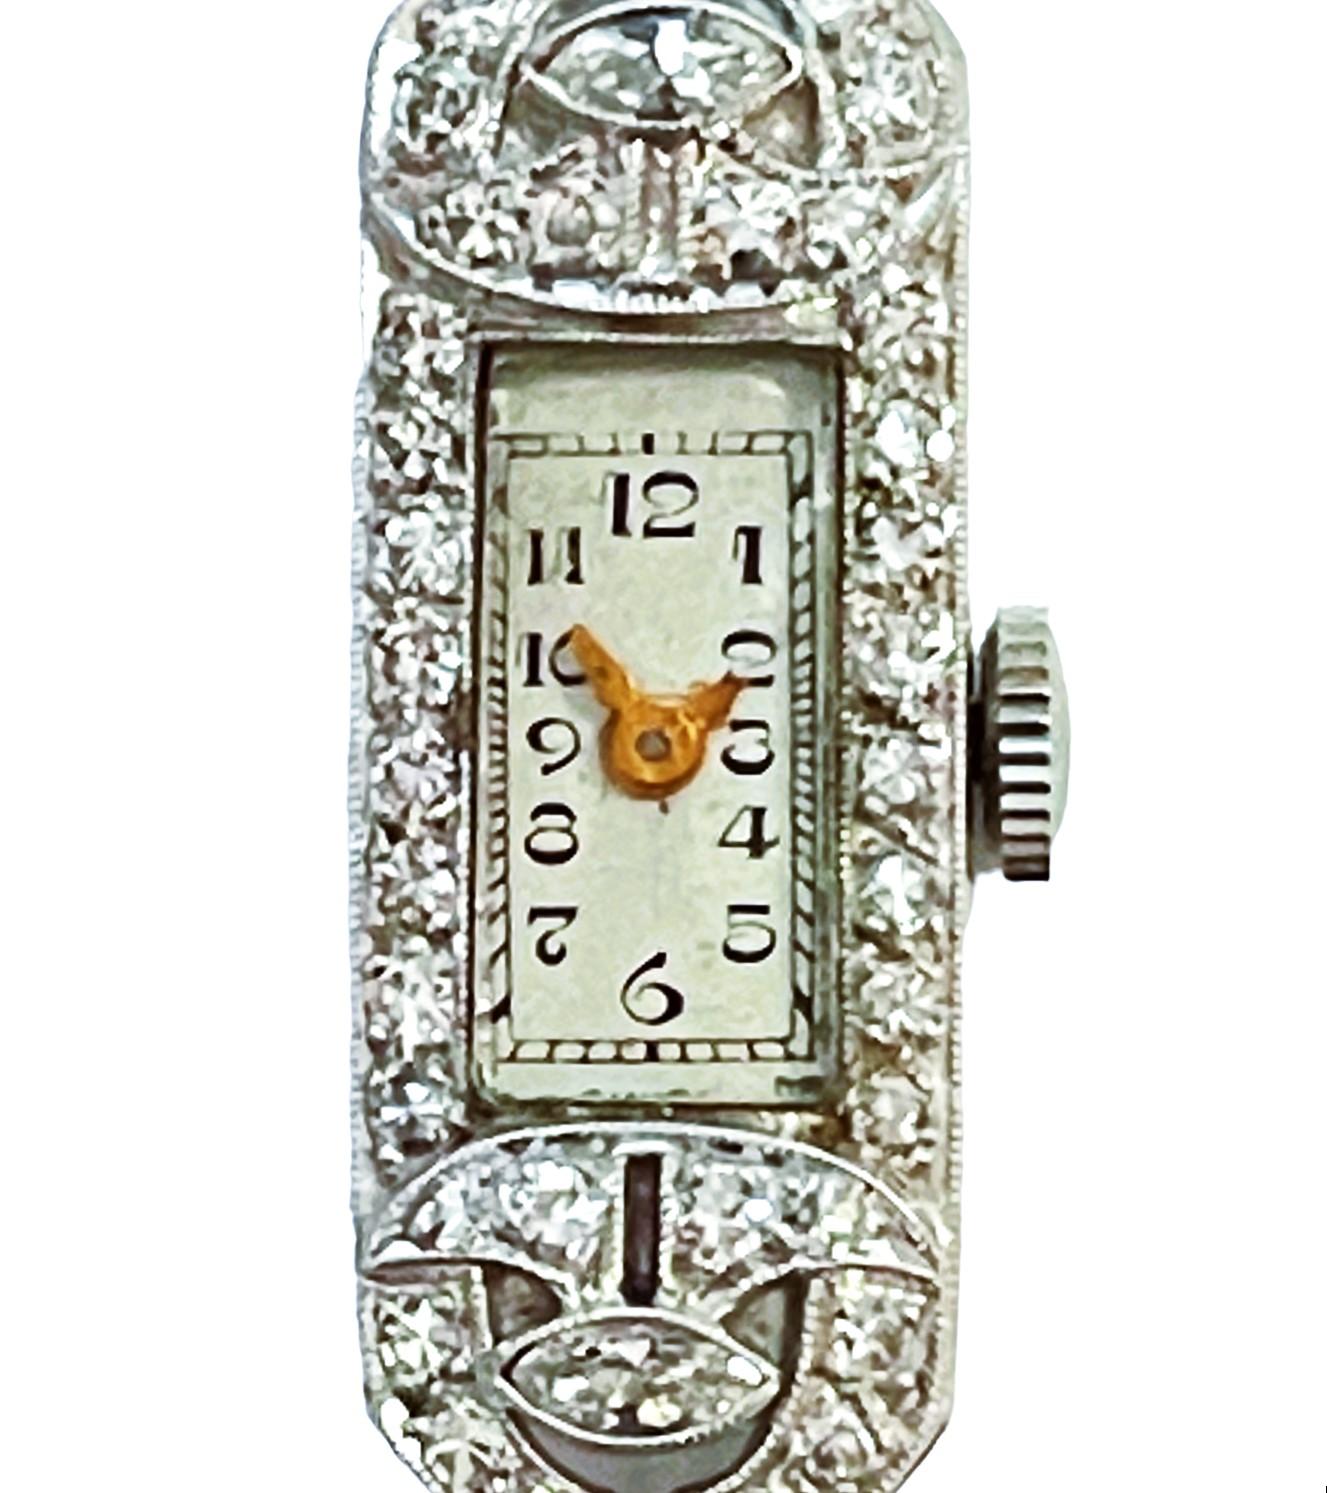 Vintage Platinum Diamond 17 Jewel Acoro Wrist Watch Bracelet Working Condition 7